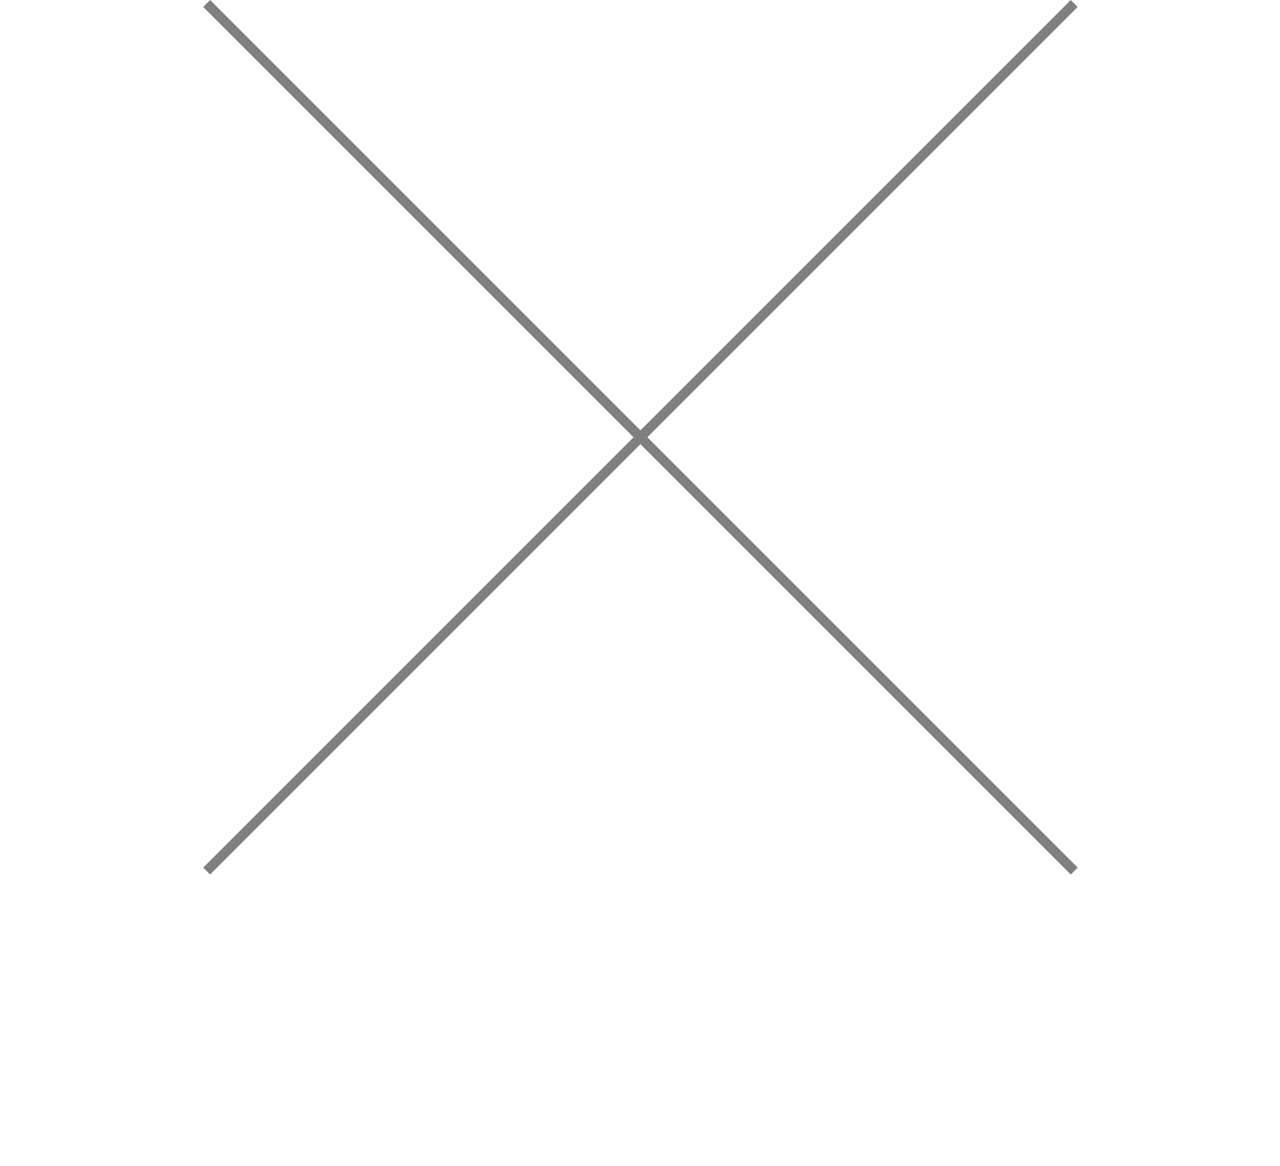 $ynfull Record$'s logo